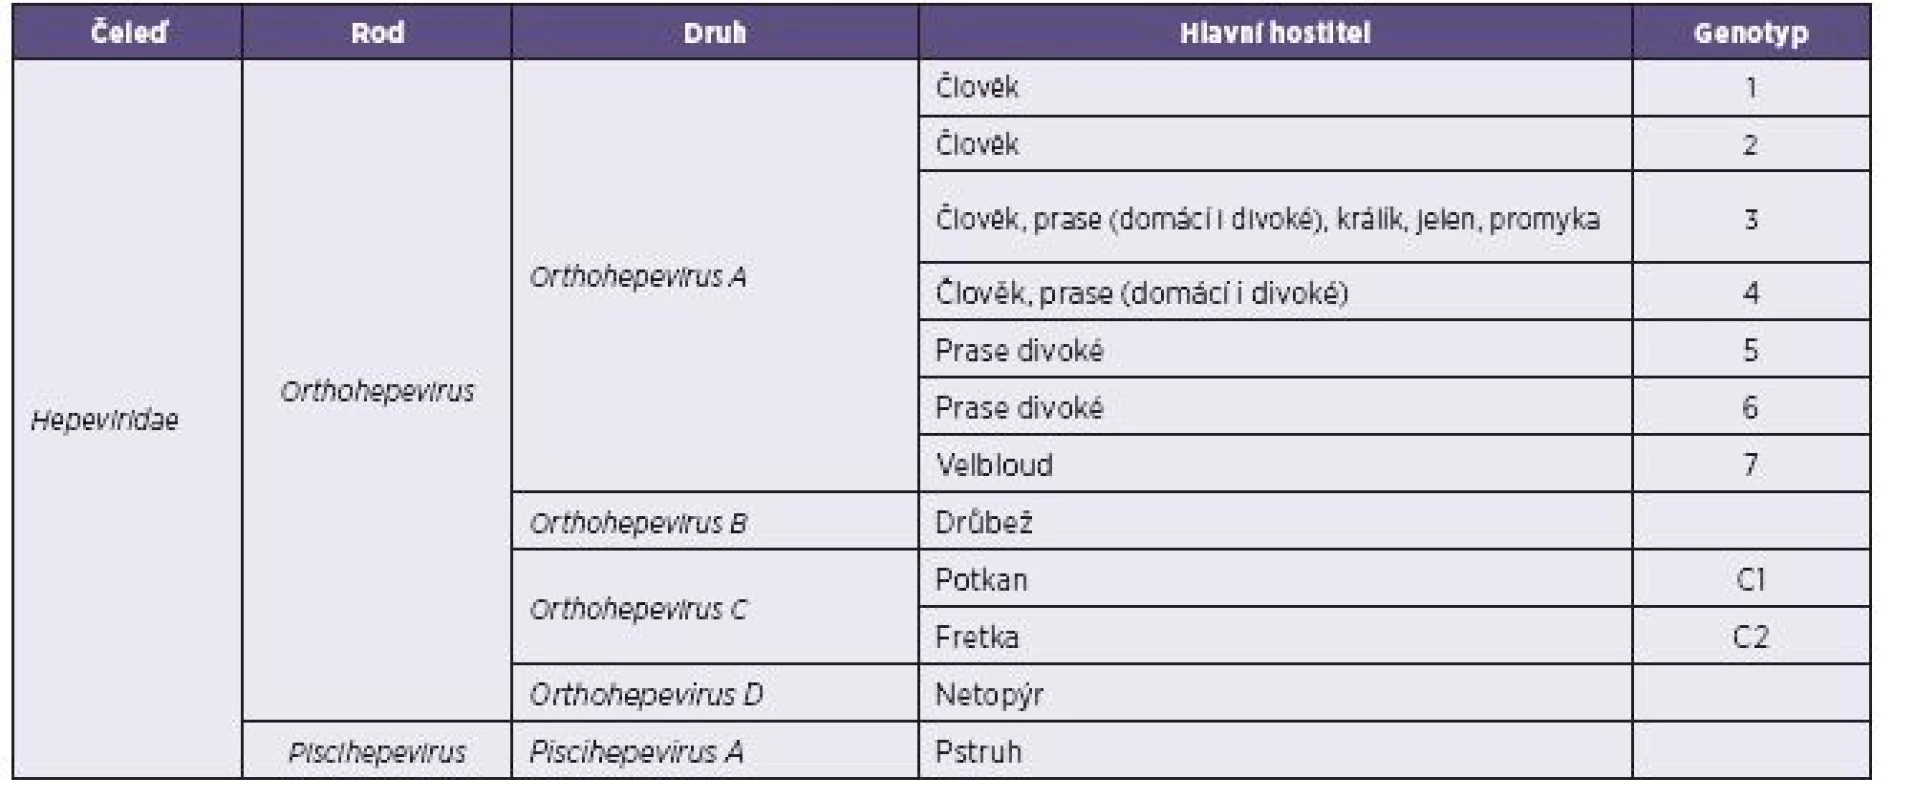 Navrhovaná klasifikace čeledi Hepeviridae [24]
Table 1. Proposed classification of the family Hepeviridae [24]